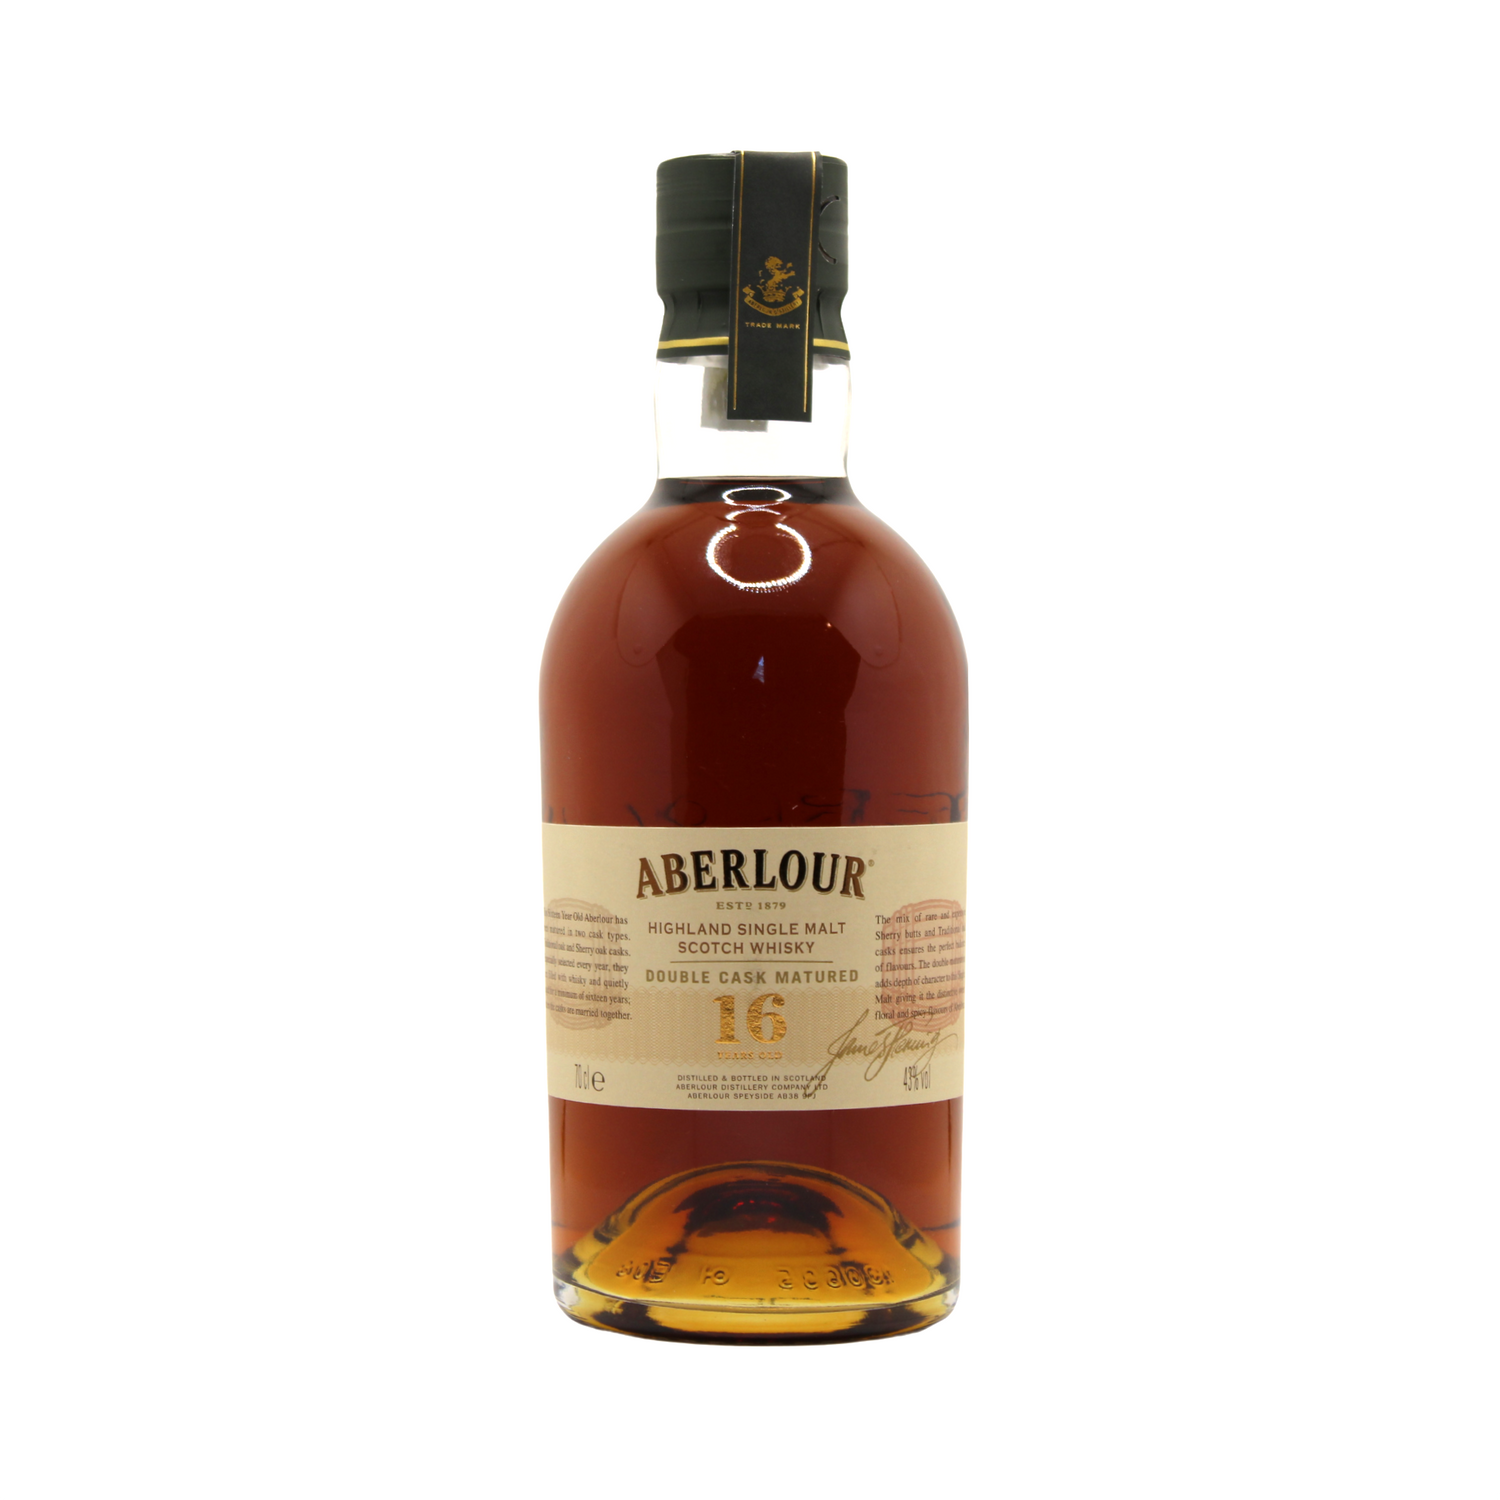 Aberlour 16 Y/O Highland Double Cask Single Malt Scotch Whisky